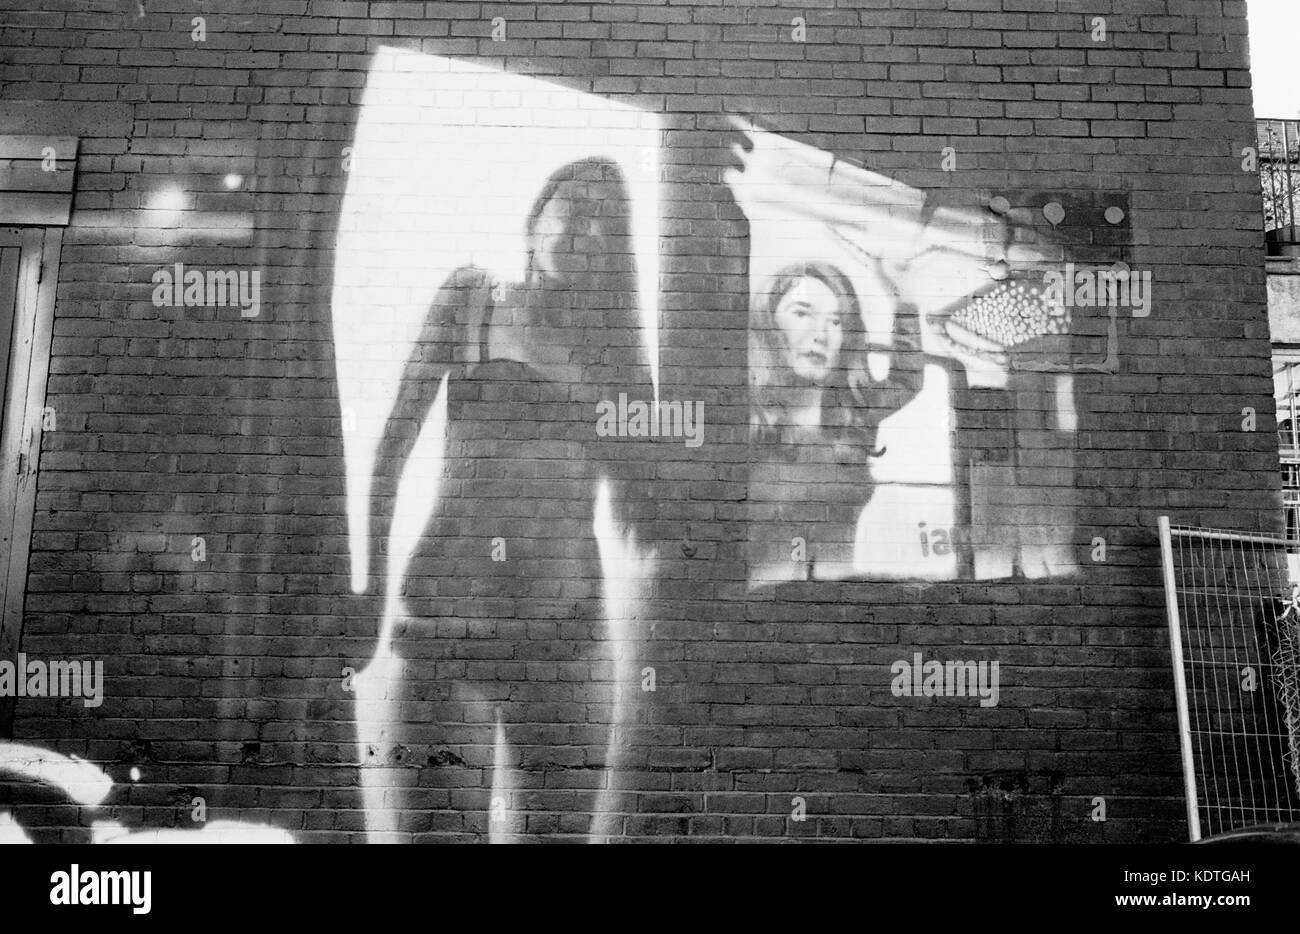 BRIGHTON INGHILTERRA - Arte di strada - grande pittura su una parete - INGLESE STREET ART - street photography - argento immagine © Frédéric BEAUMONT Foto Stock